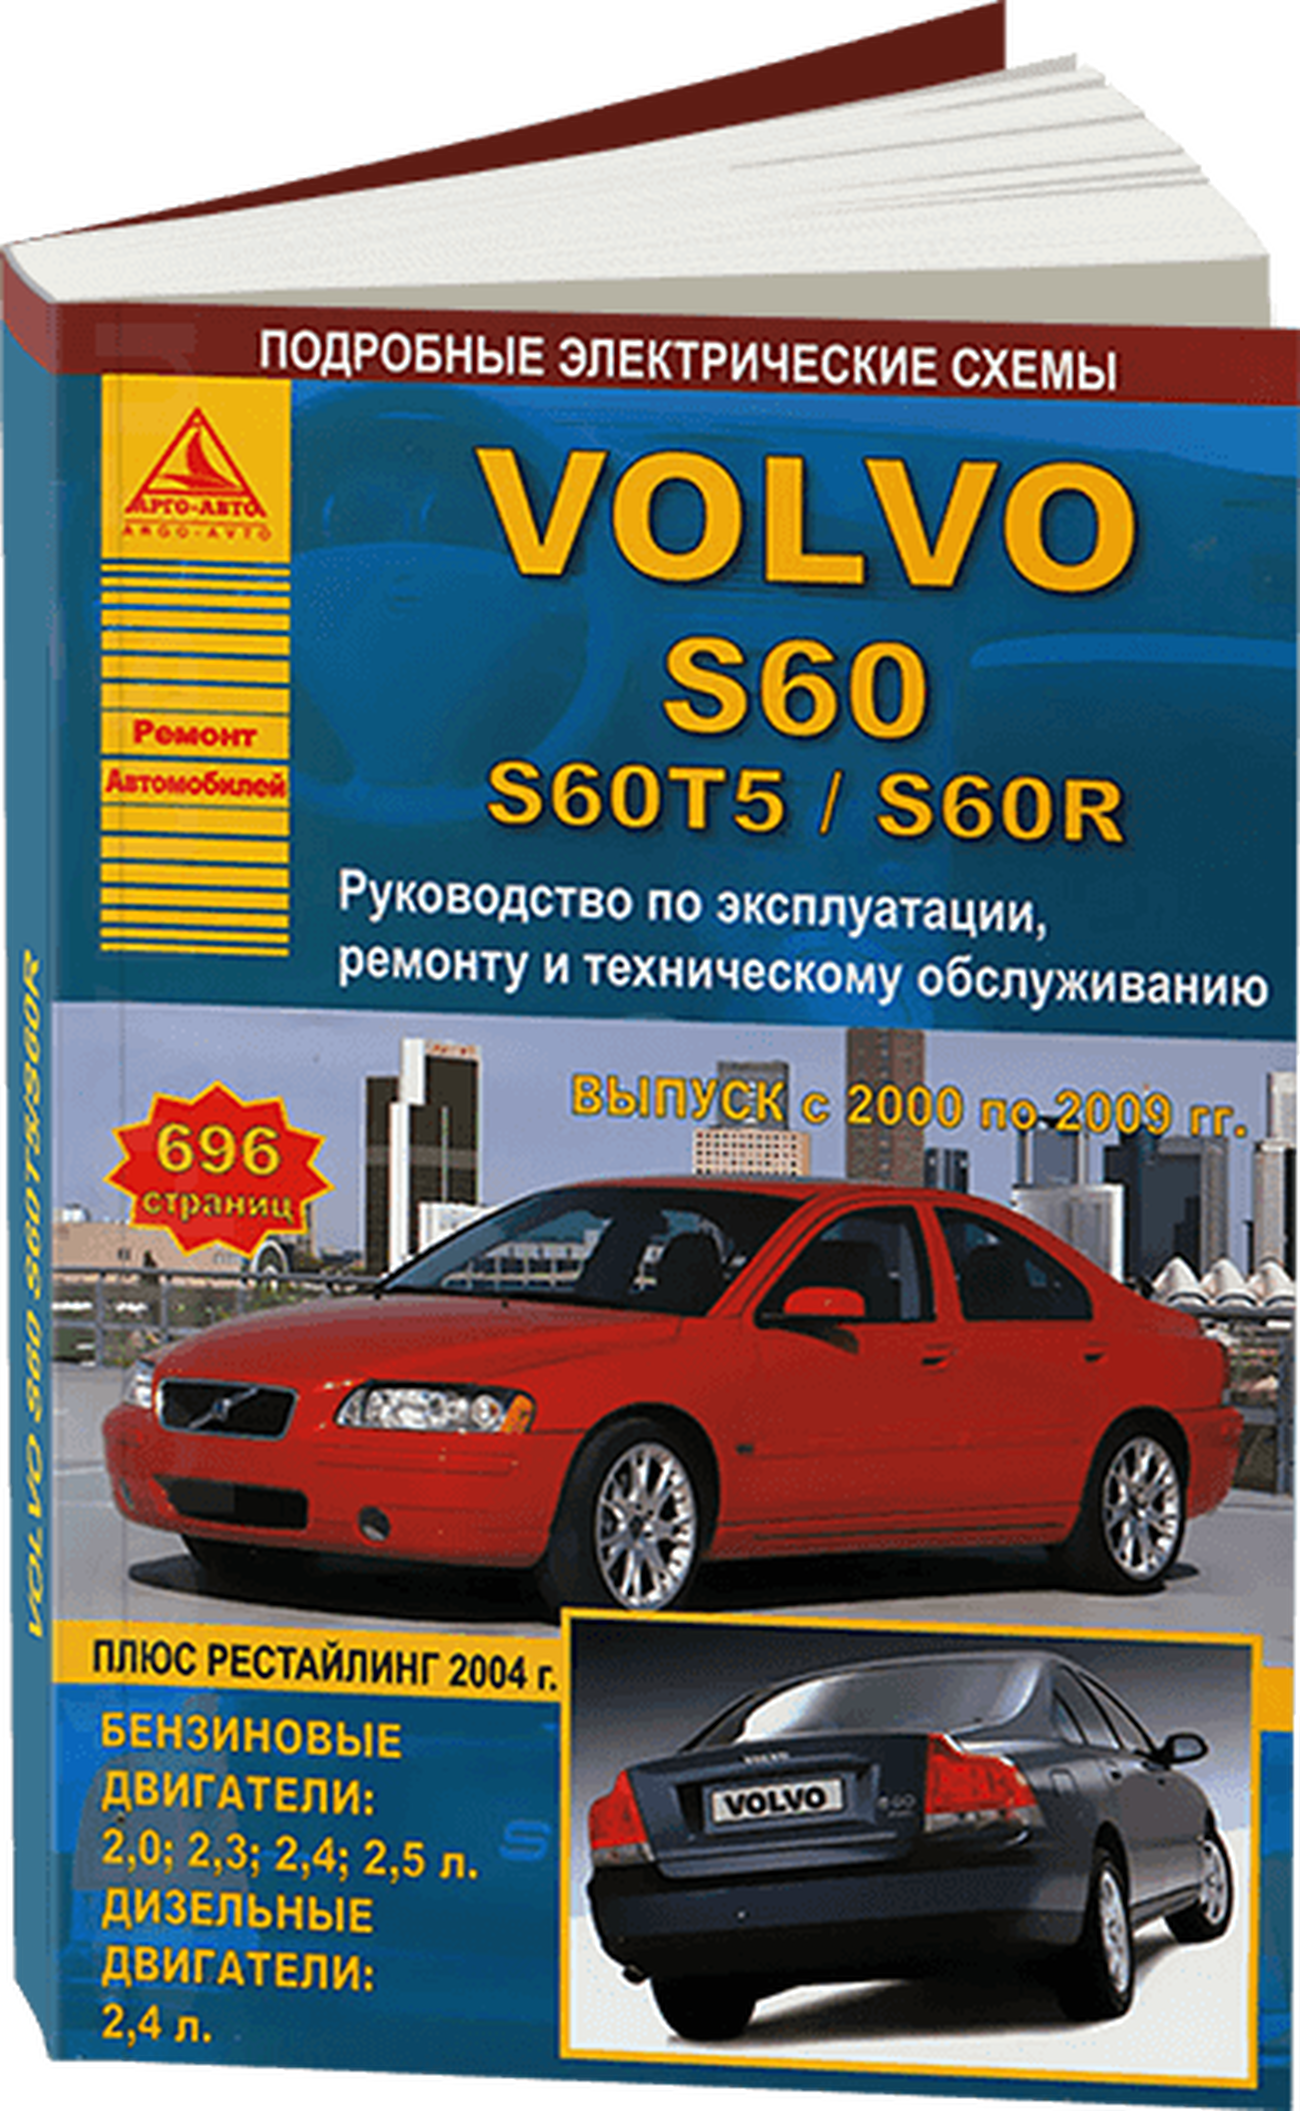 Книга: VOLVO S60 / S60T5 / S60R (б , д)  2000-2009 г.в., рем., экспл., то | Арго-Авто